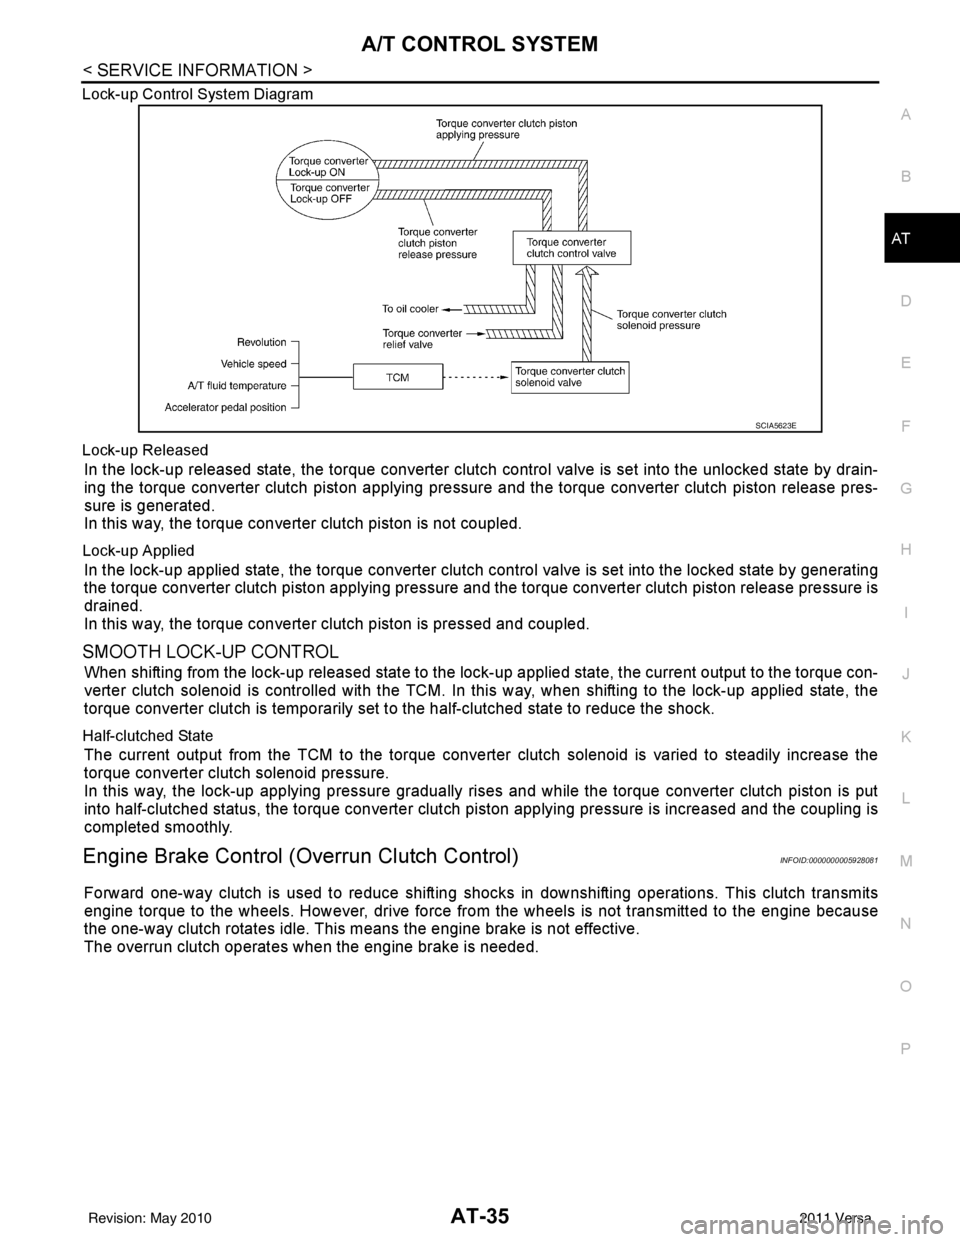 NISSAN TIIDA 2011  Service Repair Manual A/T CONTROL SYSTEMAT-35
< SERVICE INFORMATION >
DE
F
G H
I
J
K L
M A
B
AT
N
O P
Lock-up Control System Diagram
Lock-up Released 
In the lock-up released state, the torque converter clutch control valv